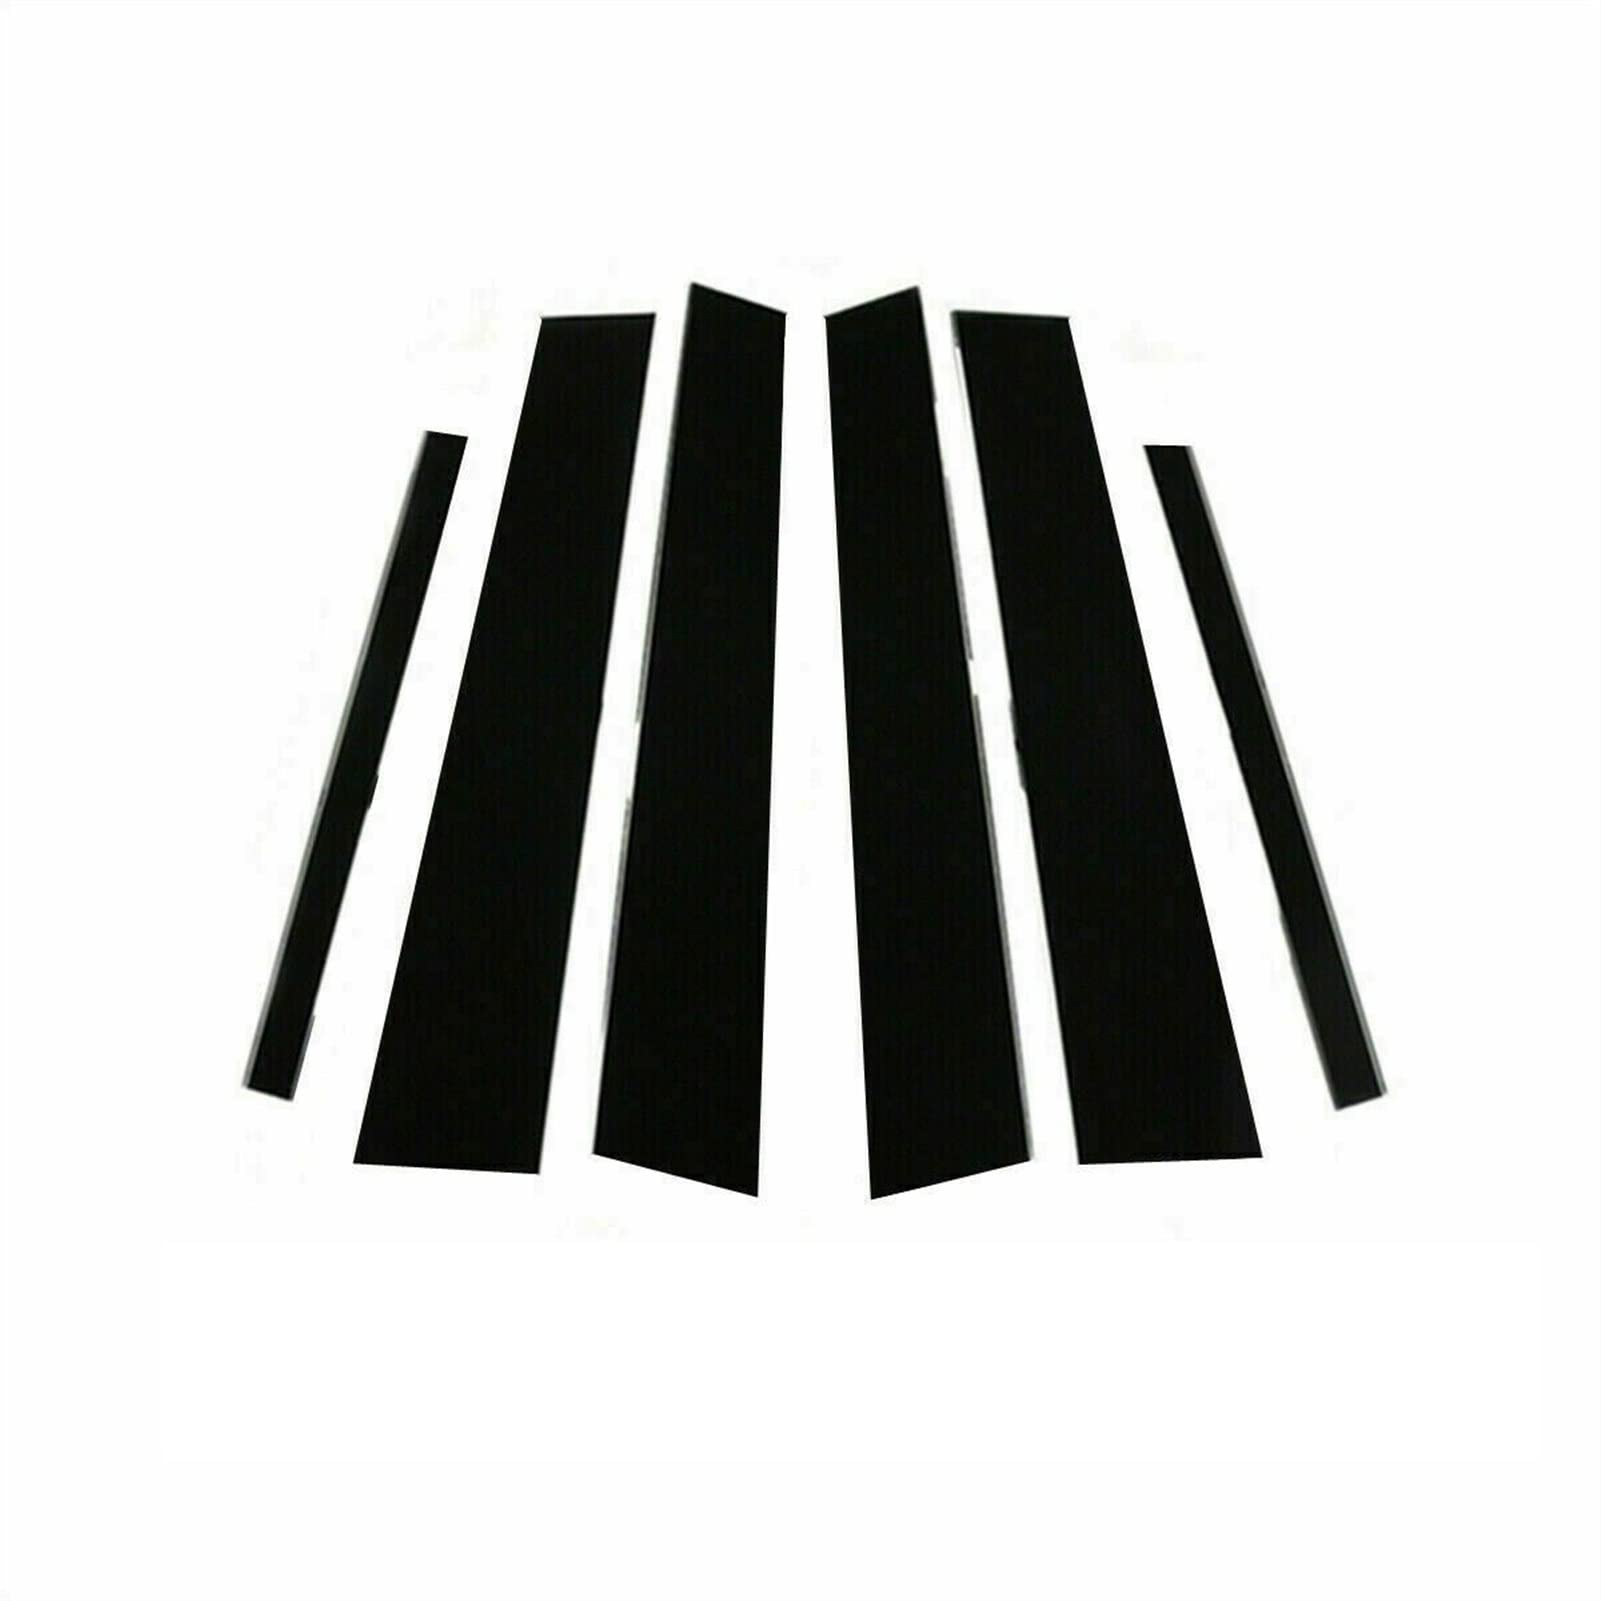 B/C Säulenverkleidung, EVURU 6PCS polierte Säulenpfosten passend for BMW 5er E60 Limousine 04-10 Fensterverkleidungsabdeckung BC-Säulenaufkleber von EVURU